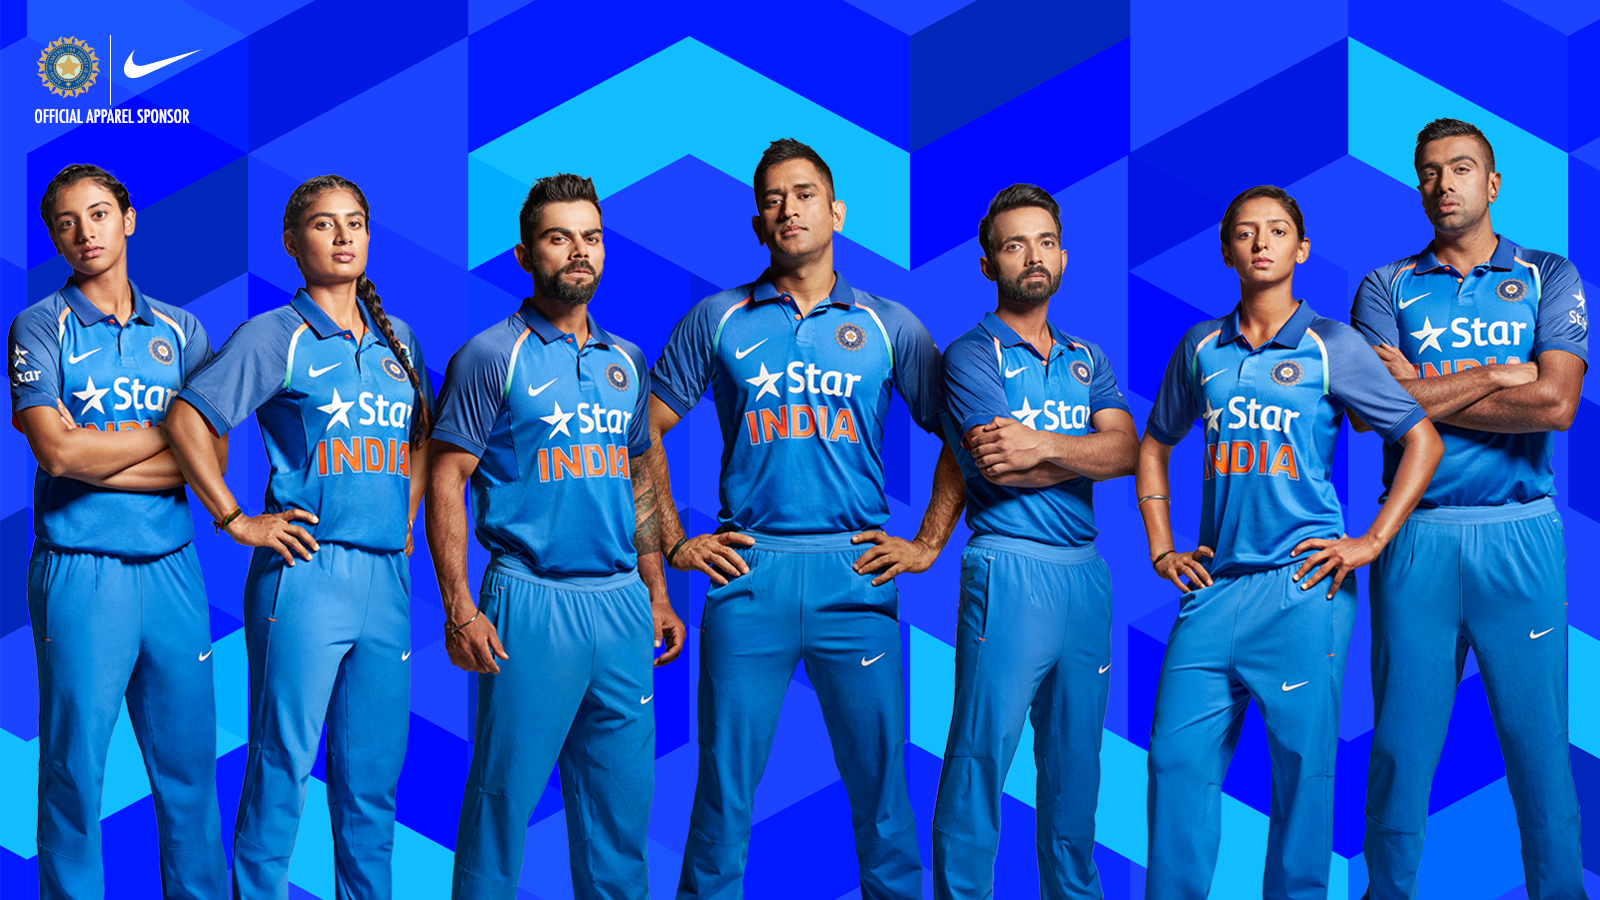 india cricket wallpaper,team,uniform,sports uniform,electric blue,jersey